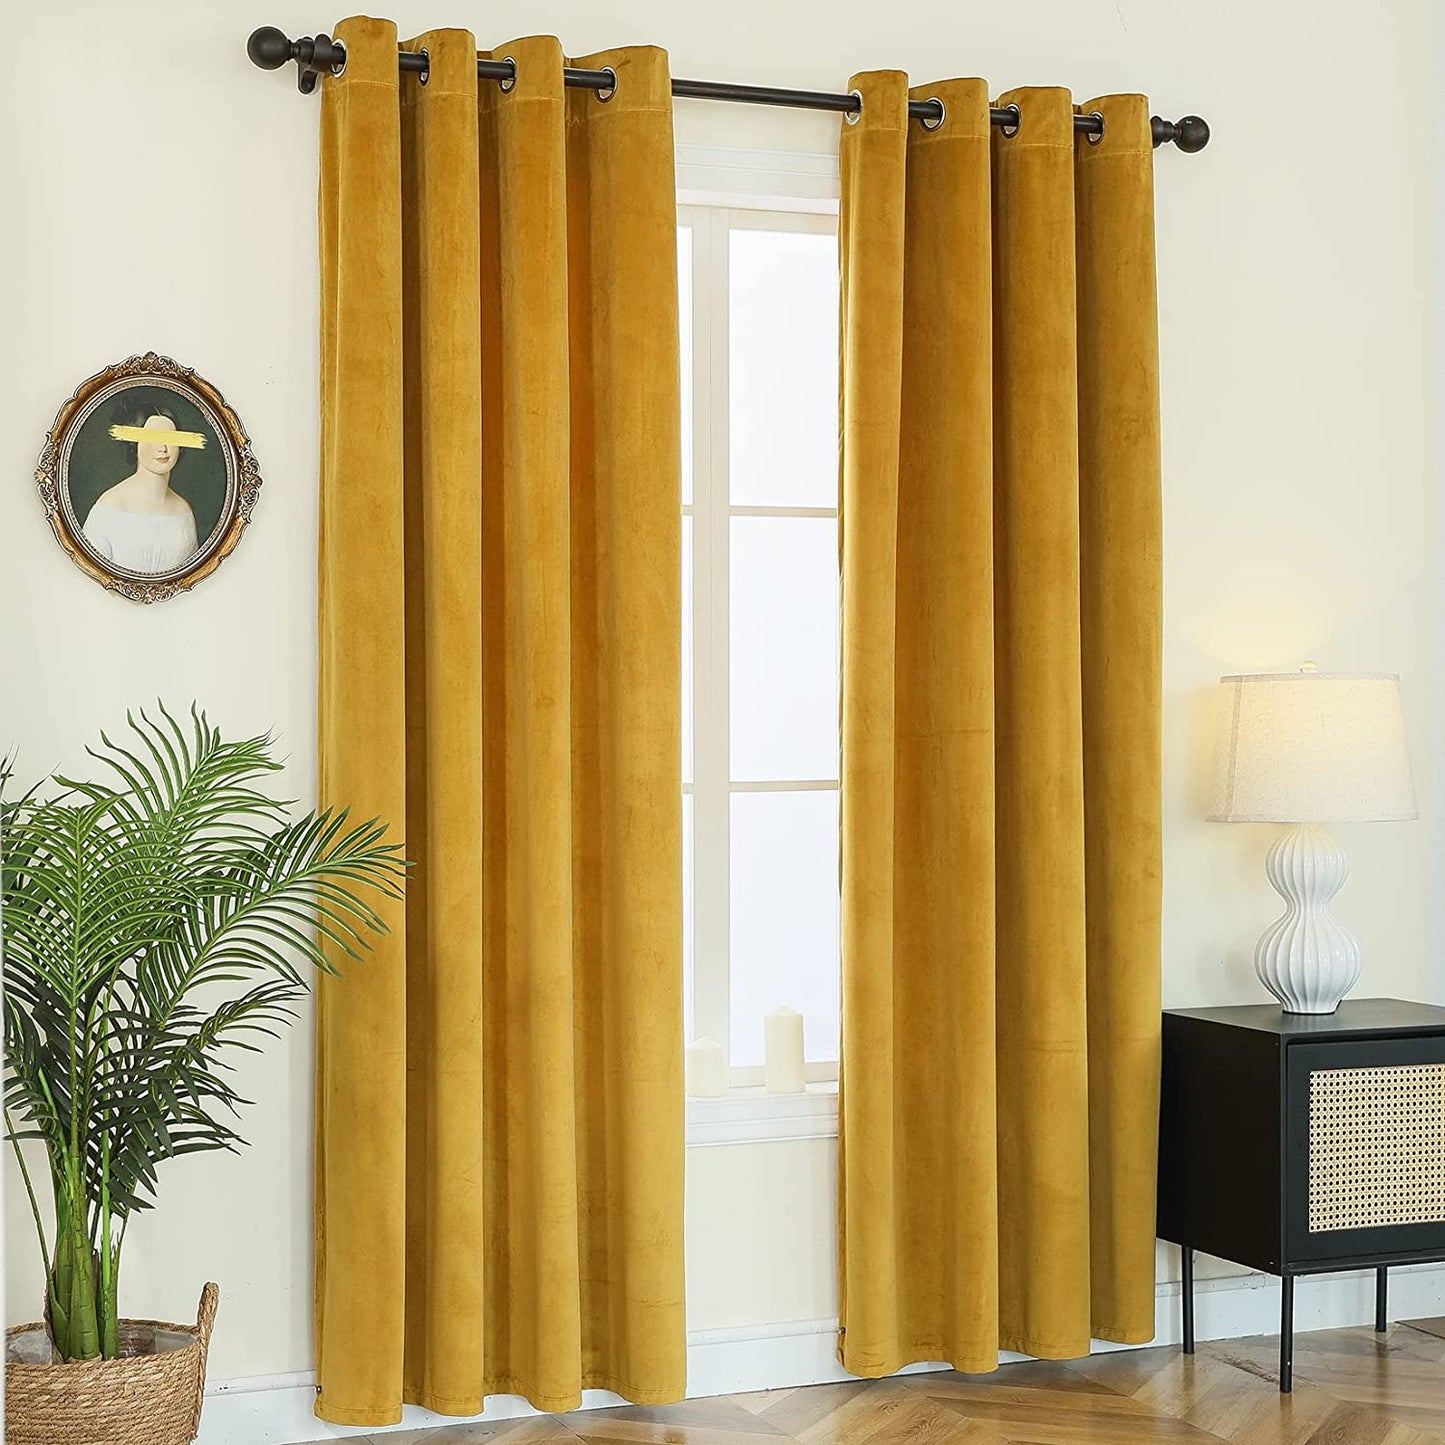 2Pcs/Pack Super Soft Velvet Blackout Drapes Thermal Insulated Royal Curtains Blackout Grommet Window Curtains